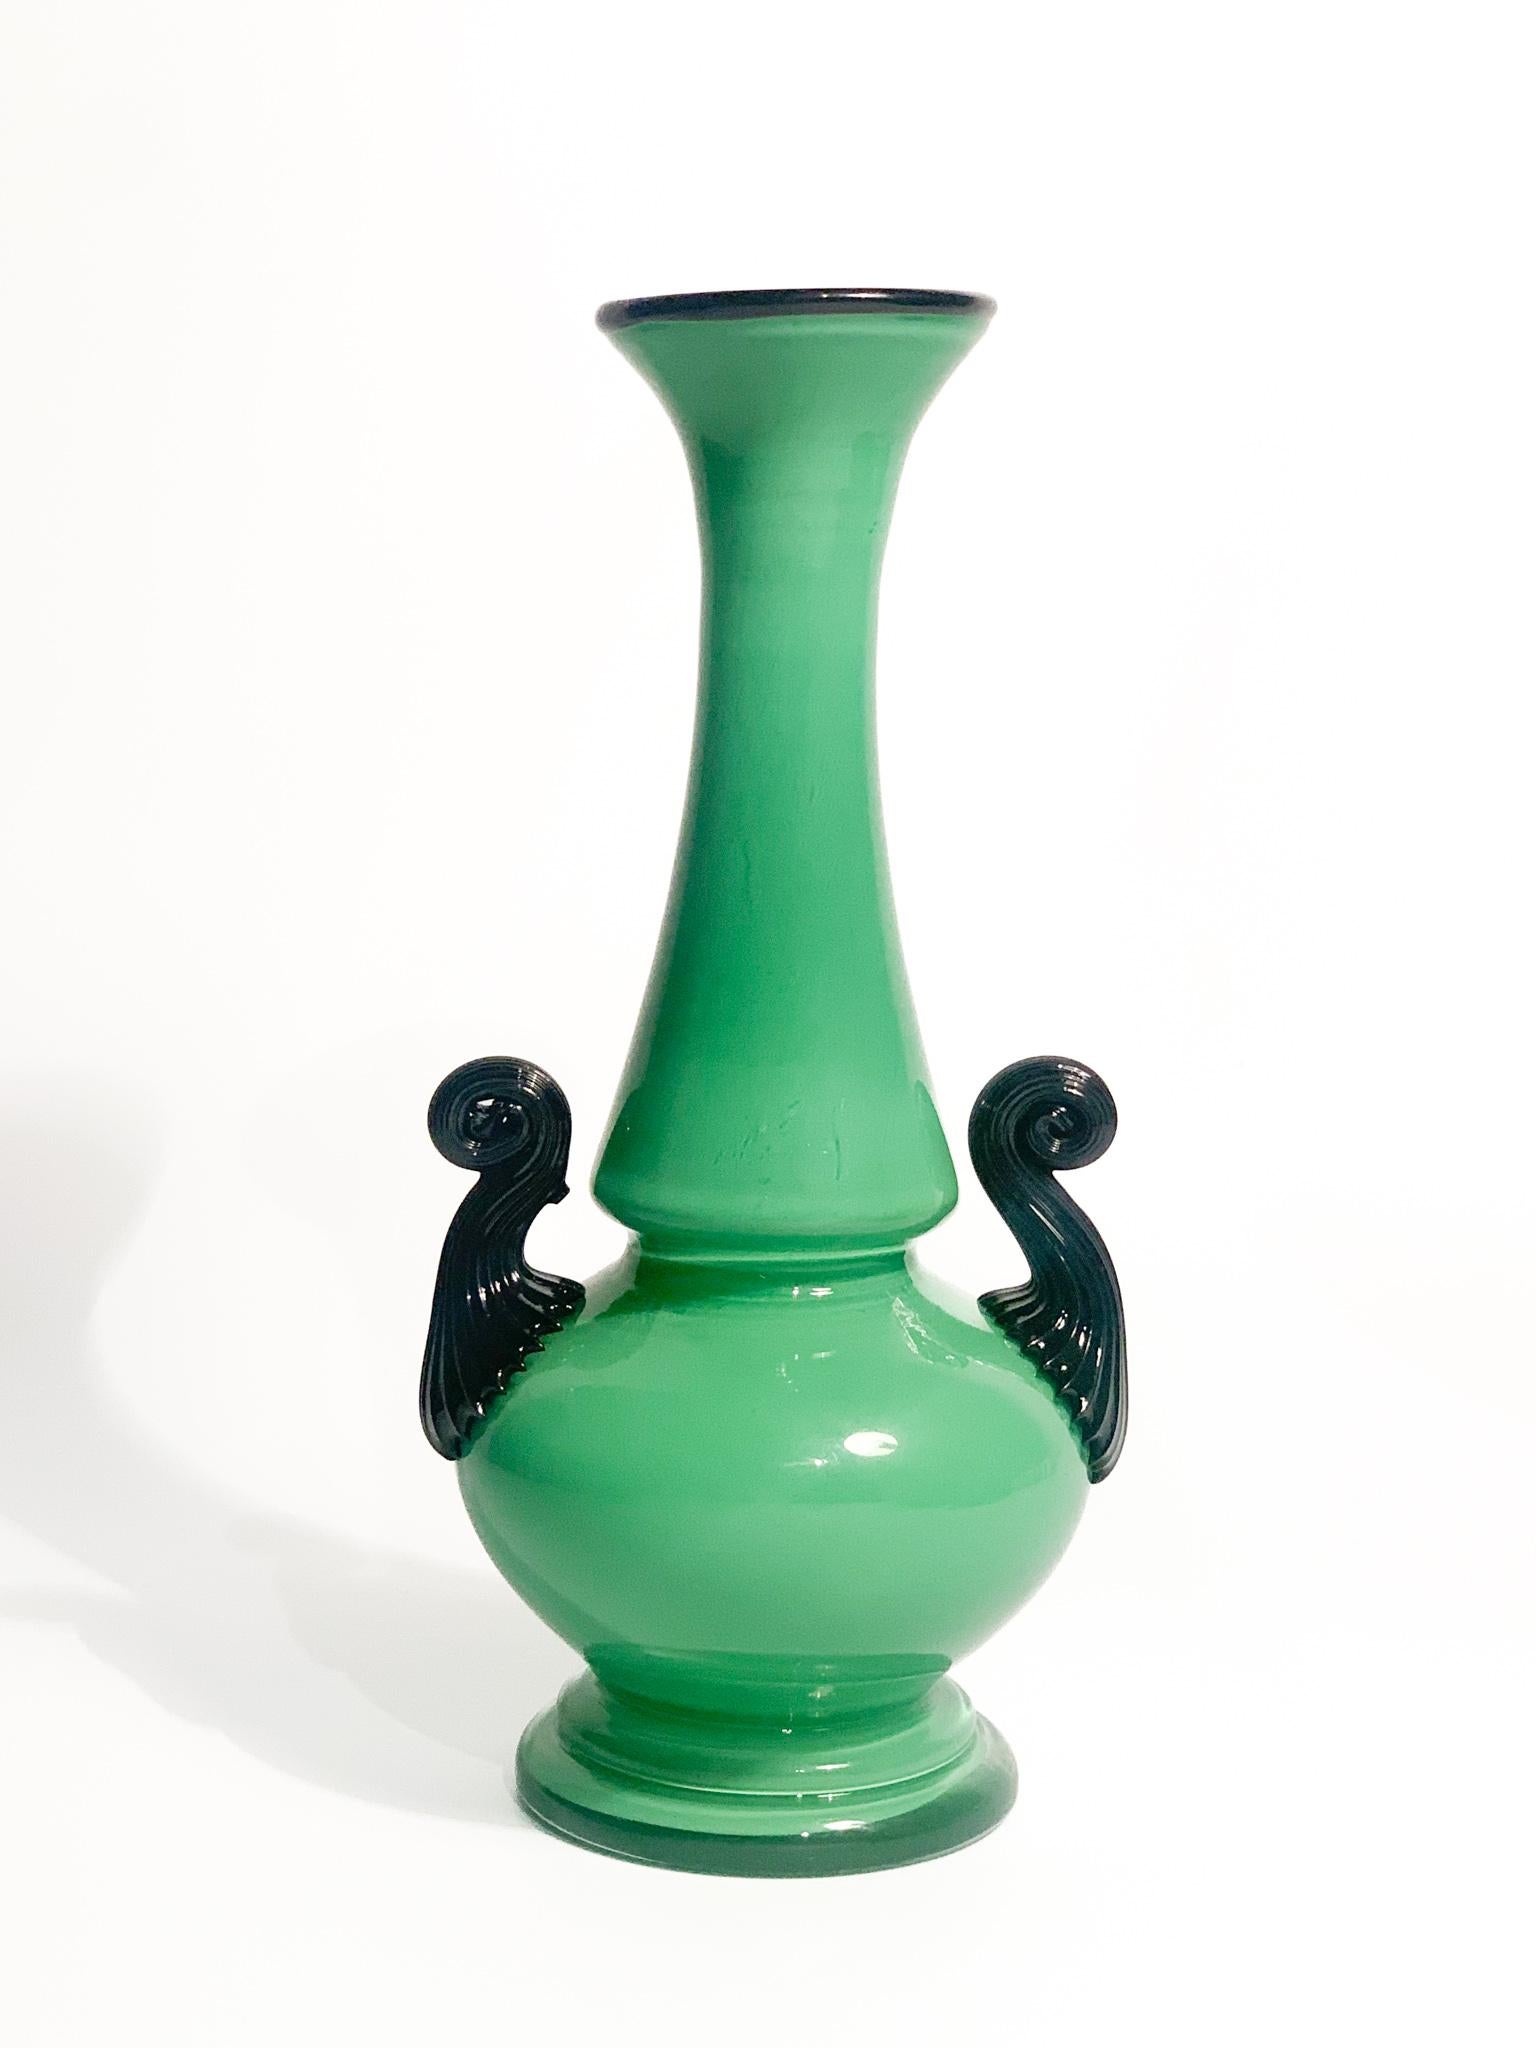 Deco vase in green and black Murano glass, made by Napoleone Martinuzzi in the 1930s

Ø 9 cm h 15 cm